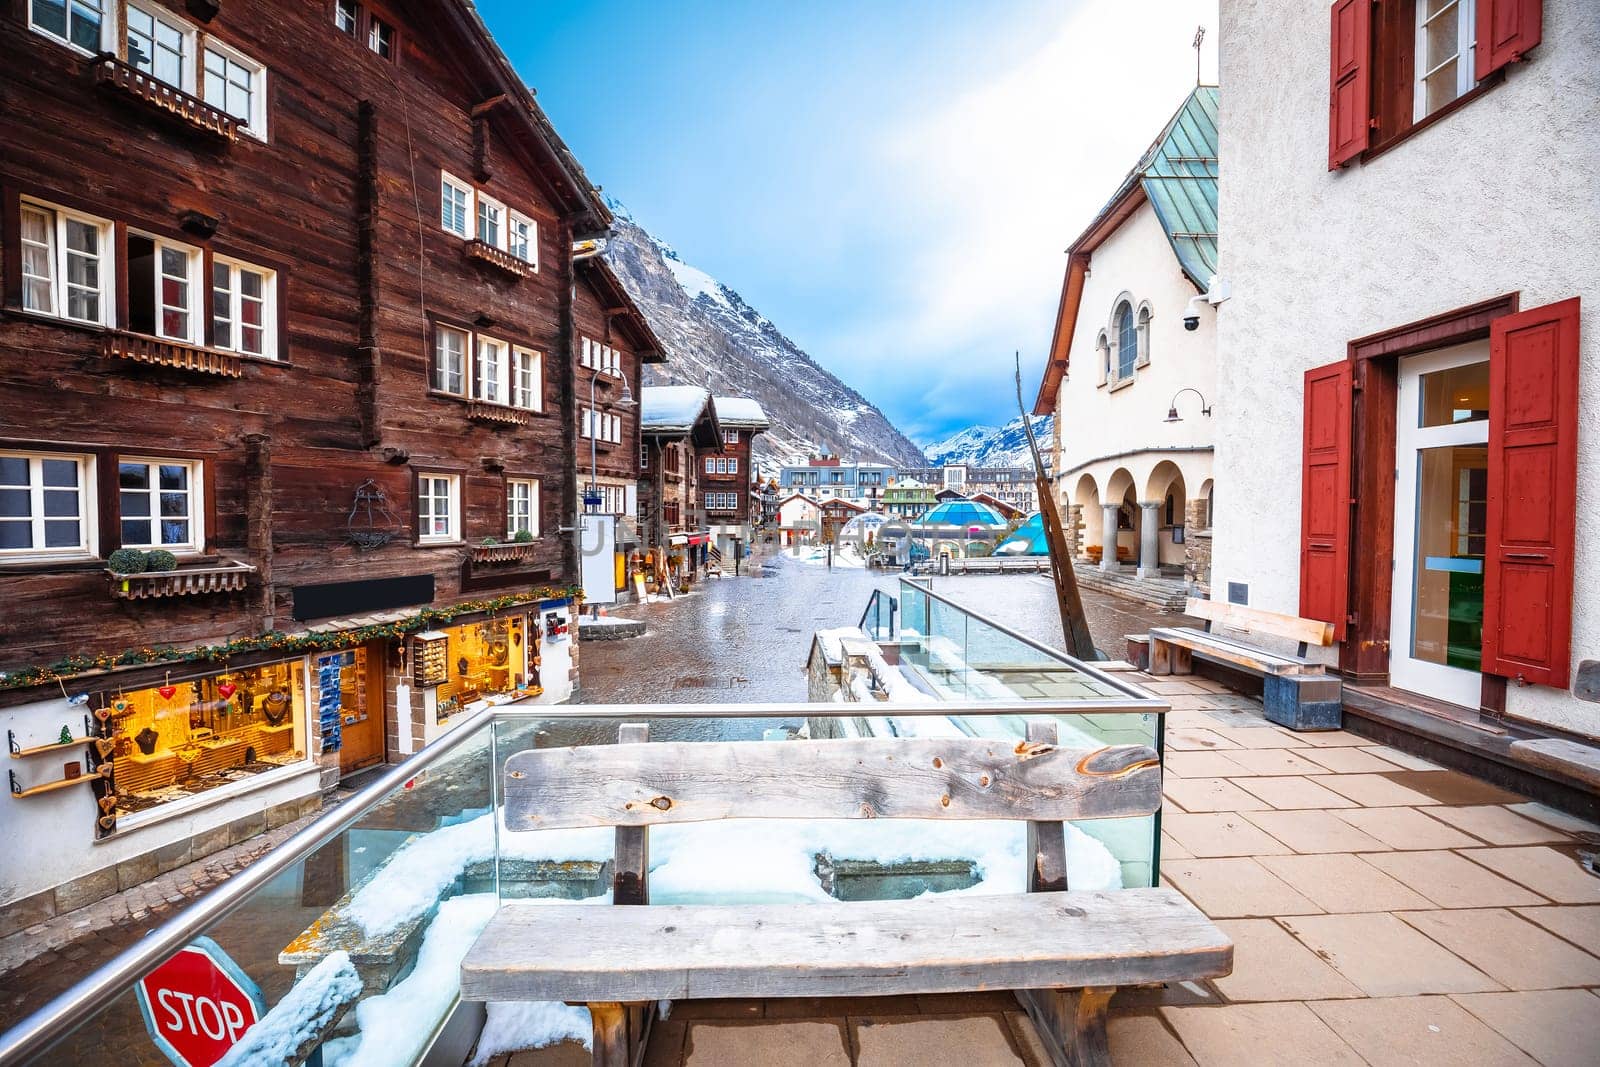 Idyllic town of Zermatt city center view, luxury winter destination by xbrchx